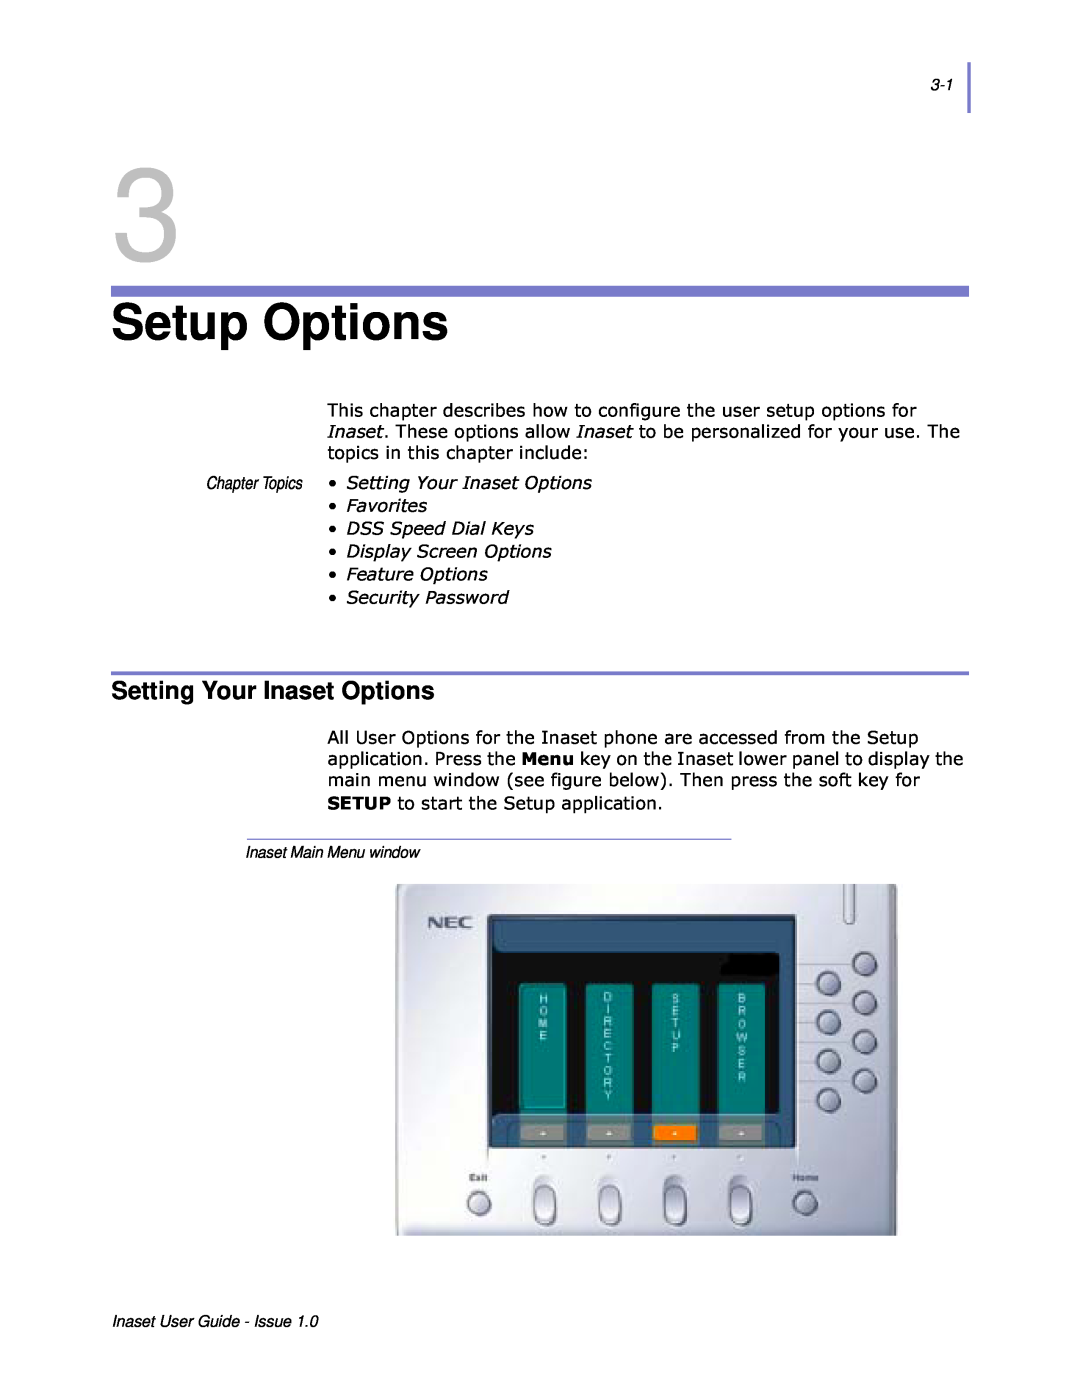 NEC NEAX 2000 IPS Setup Options, Setting Your Inaset Options, Wrslfvlqwklvfkdswhulqfoxgh, 6783WRVWDUWWKH6HWXSDSSOLFDWLRQ 